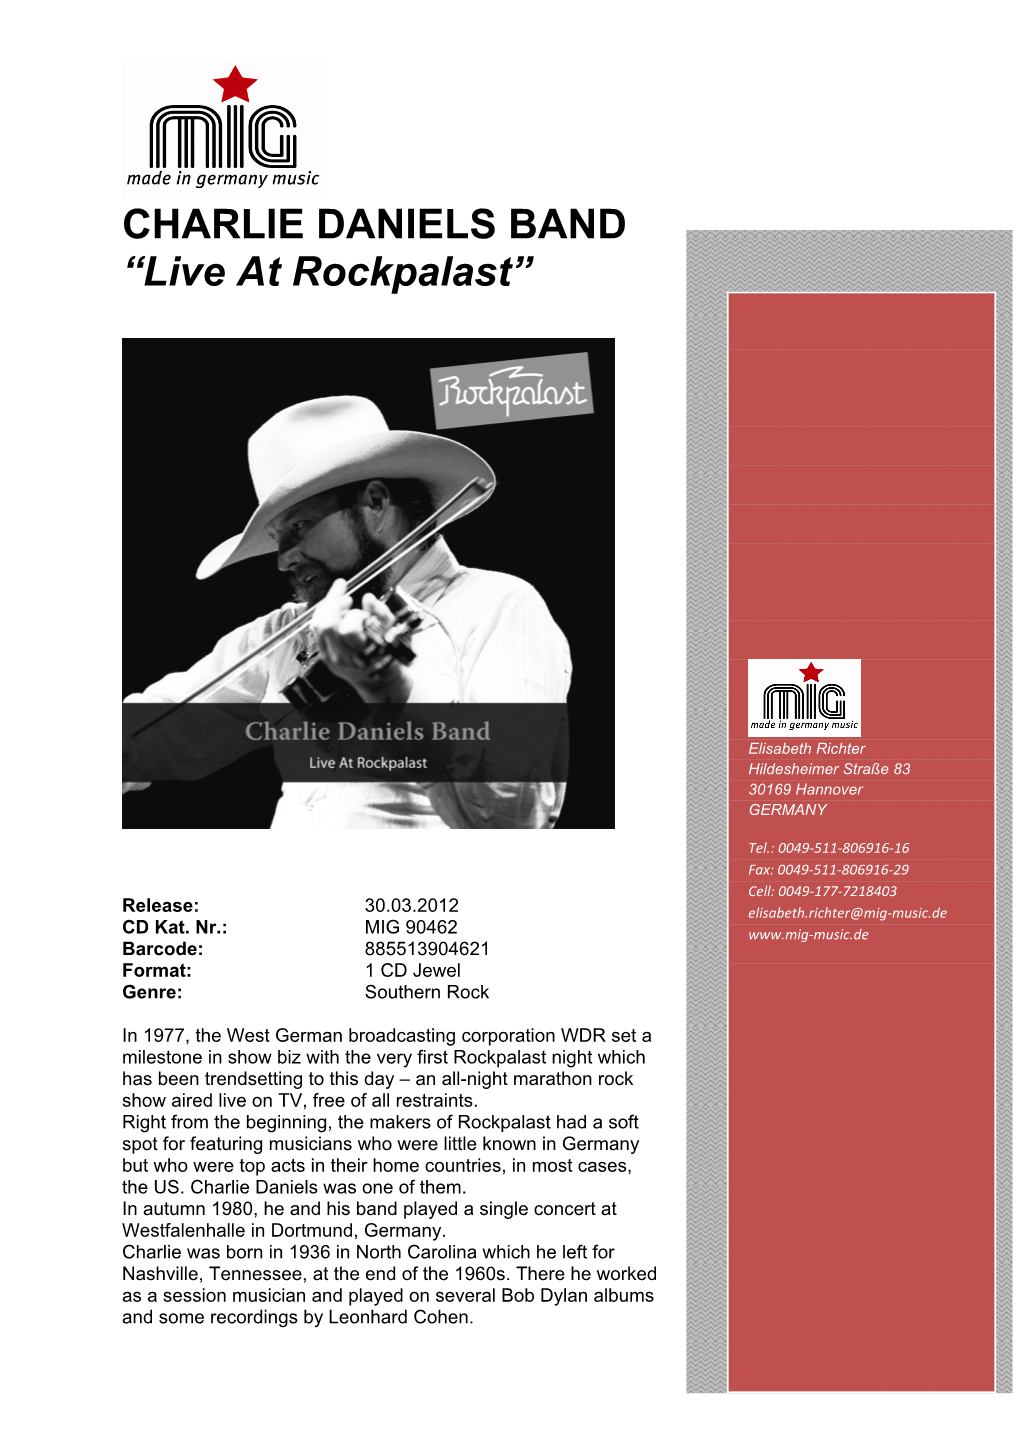 CHARLIE DANIELS BAND “Live at Rockpalast”